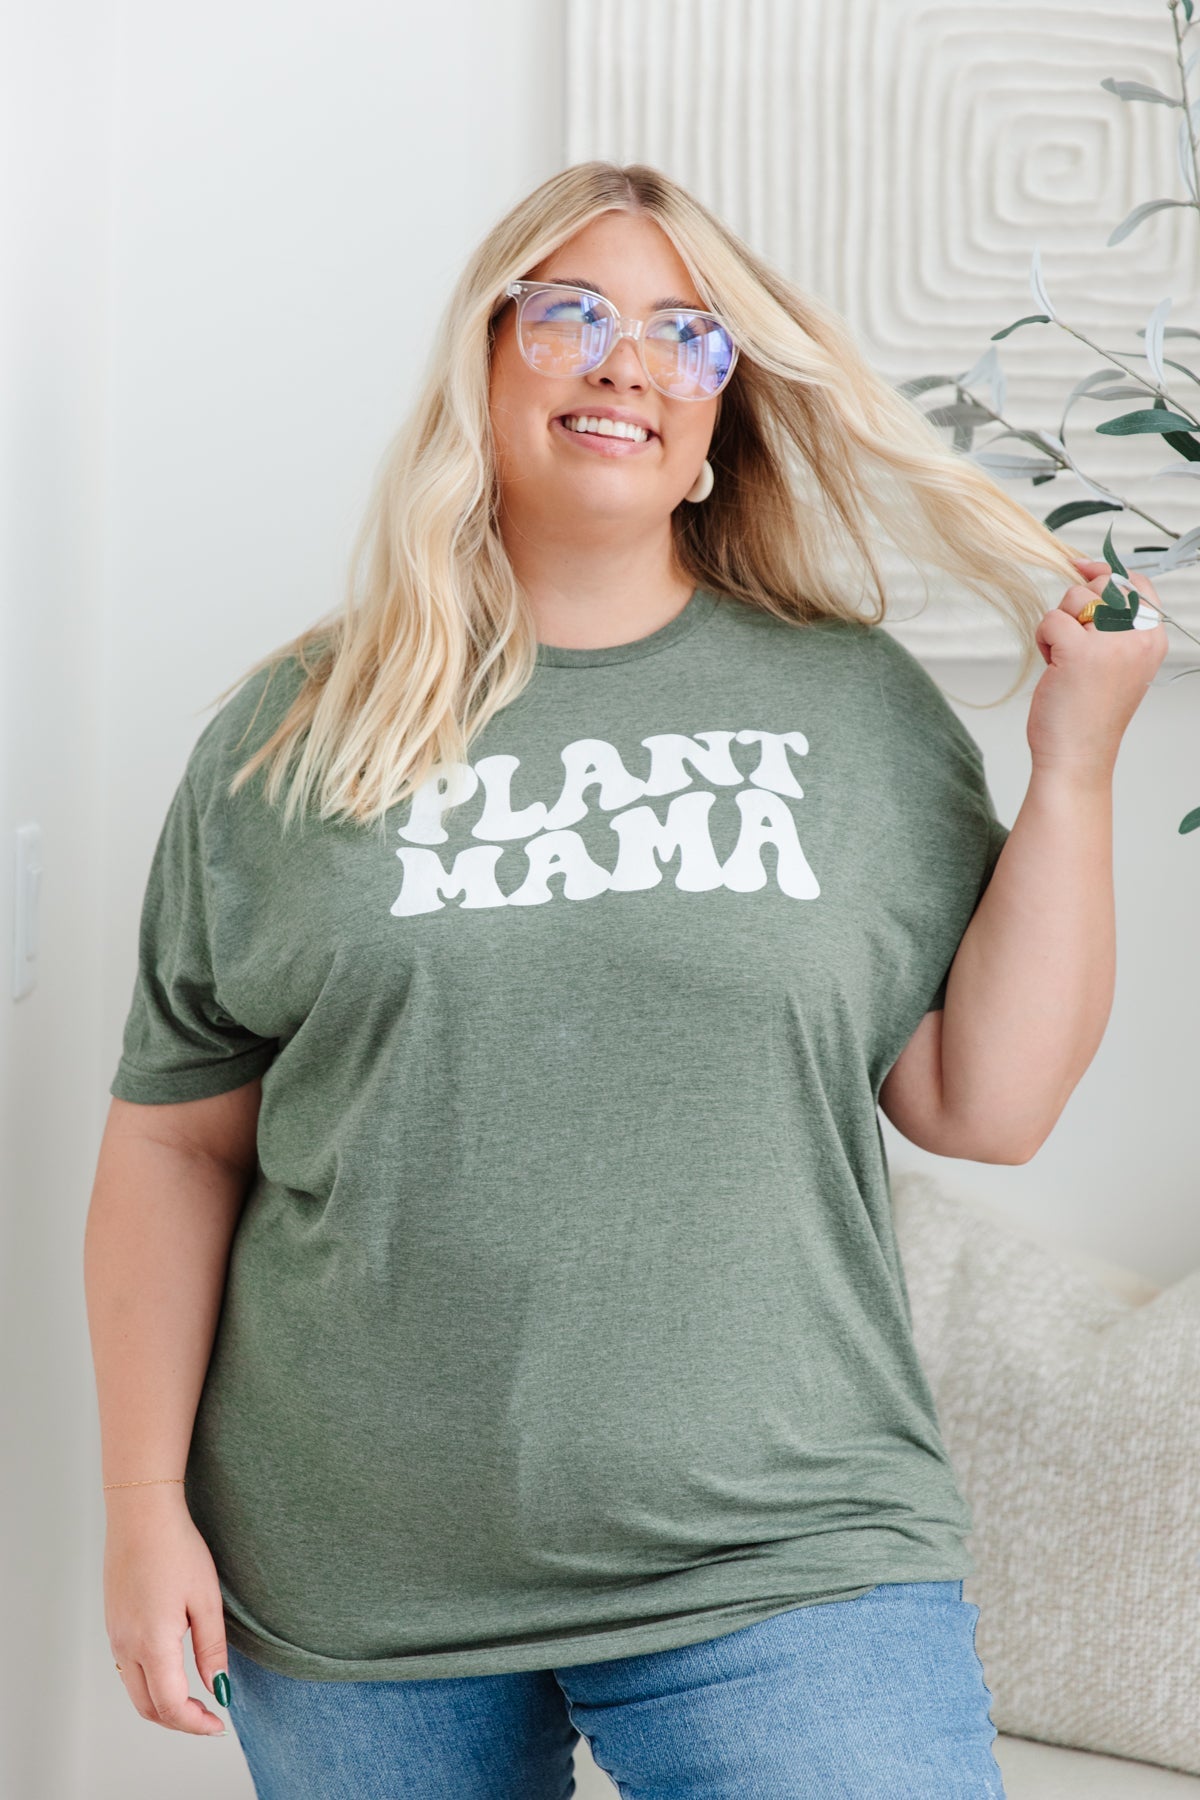 Plant Mama Graphic Tee